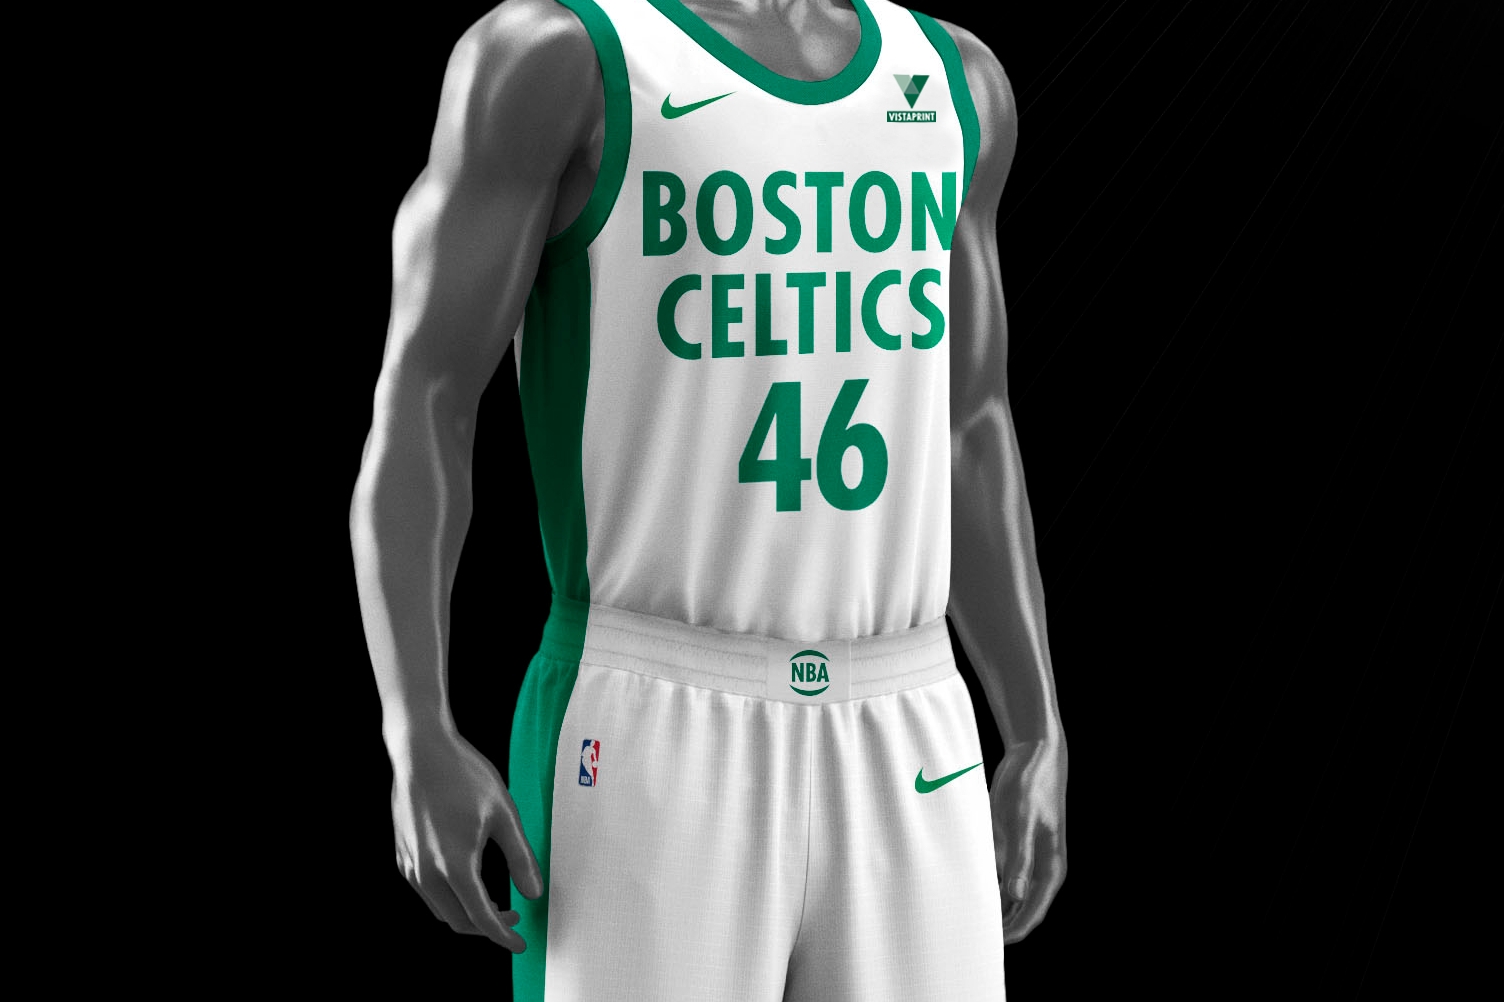 boston city edition jersey